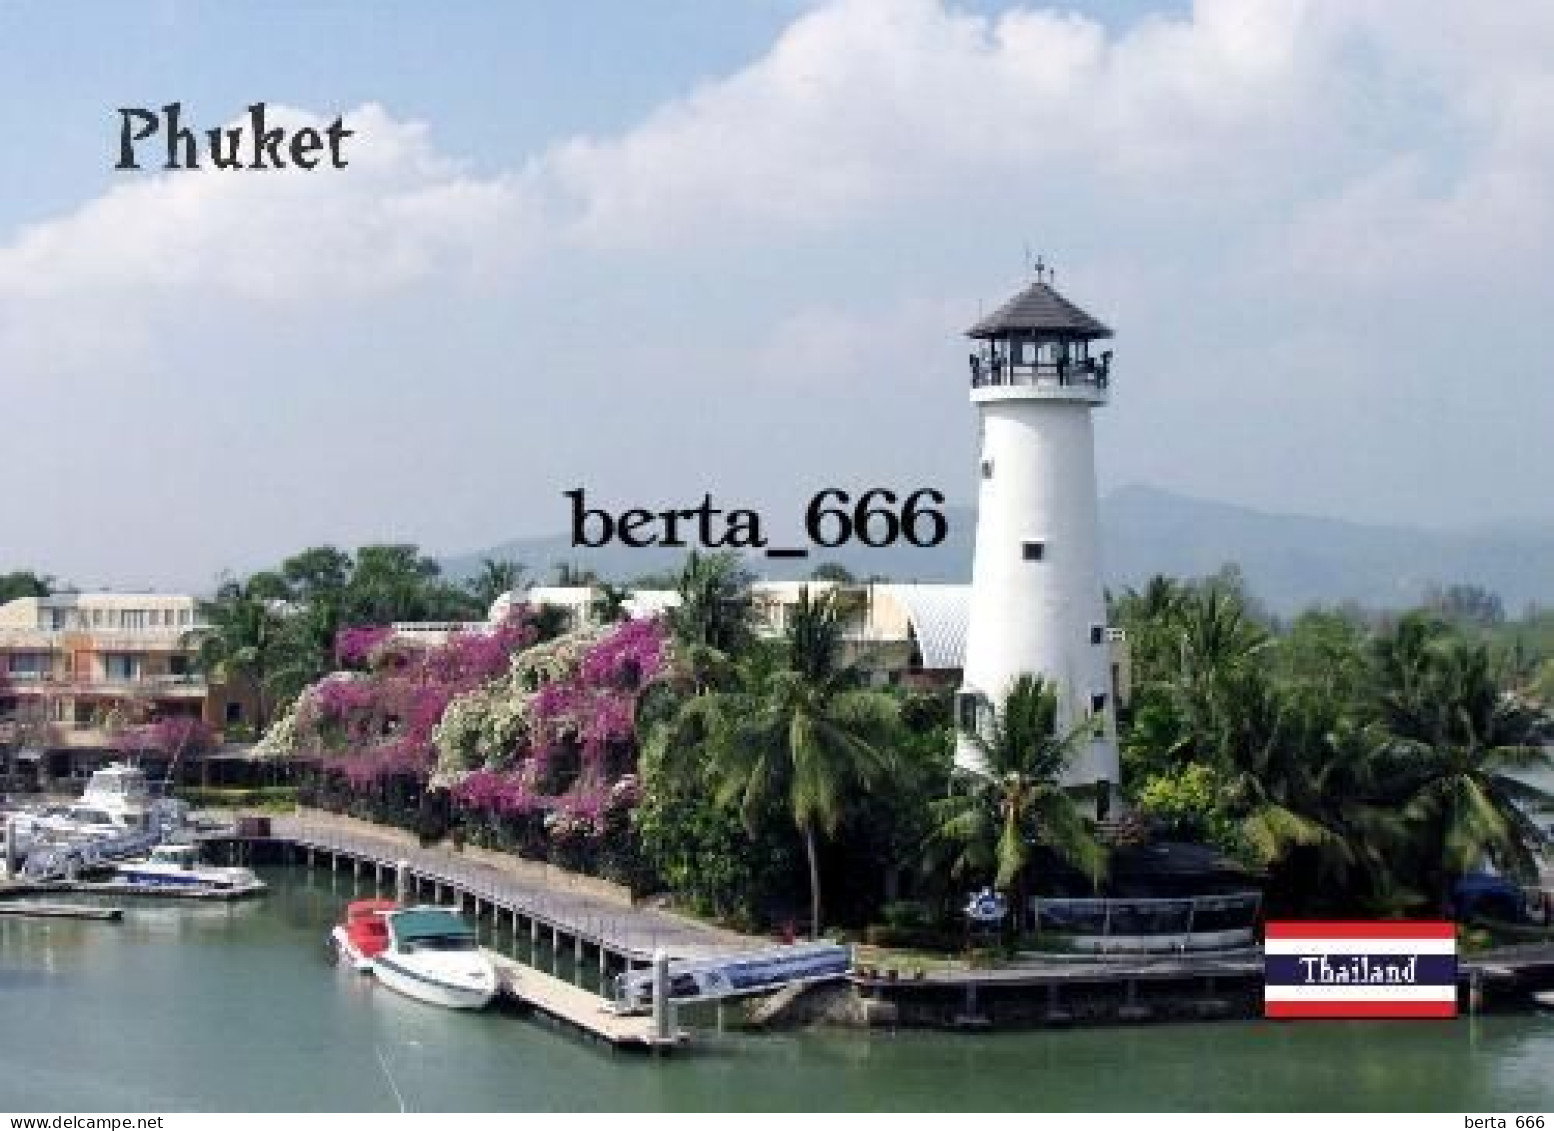 Thailand Phuket Island Lighthouse New Postcard - Fari